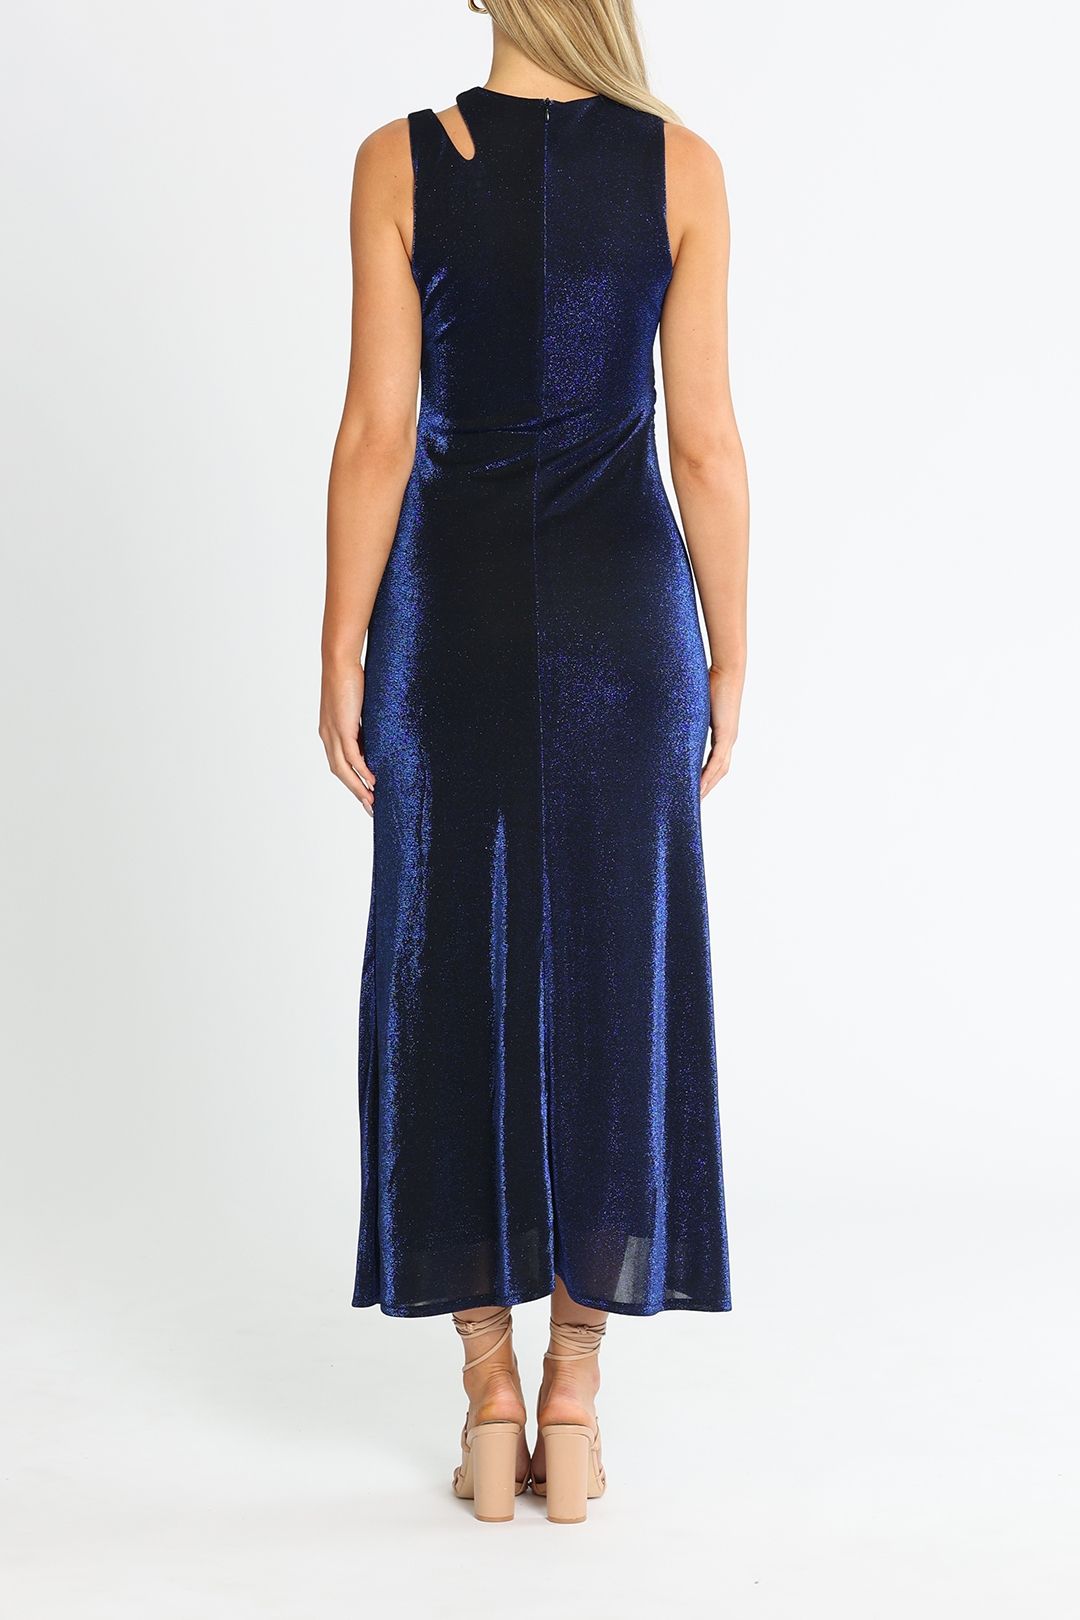 Ruched Mesh Midi Dress  Buy Dresses Online - Cue